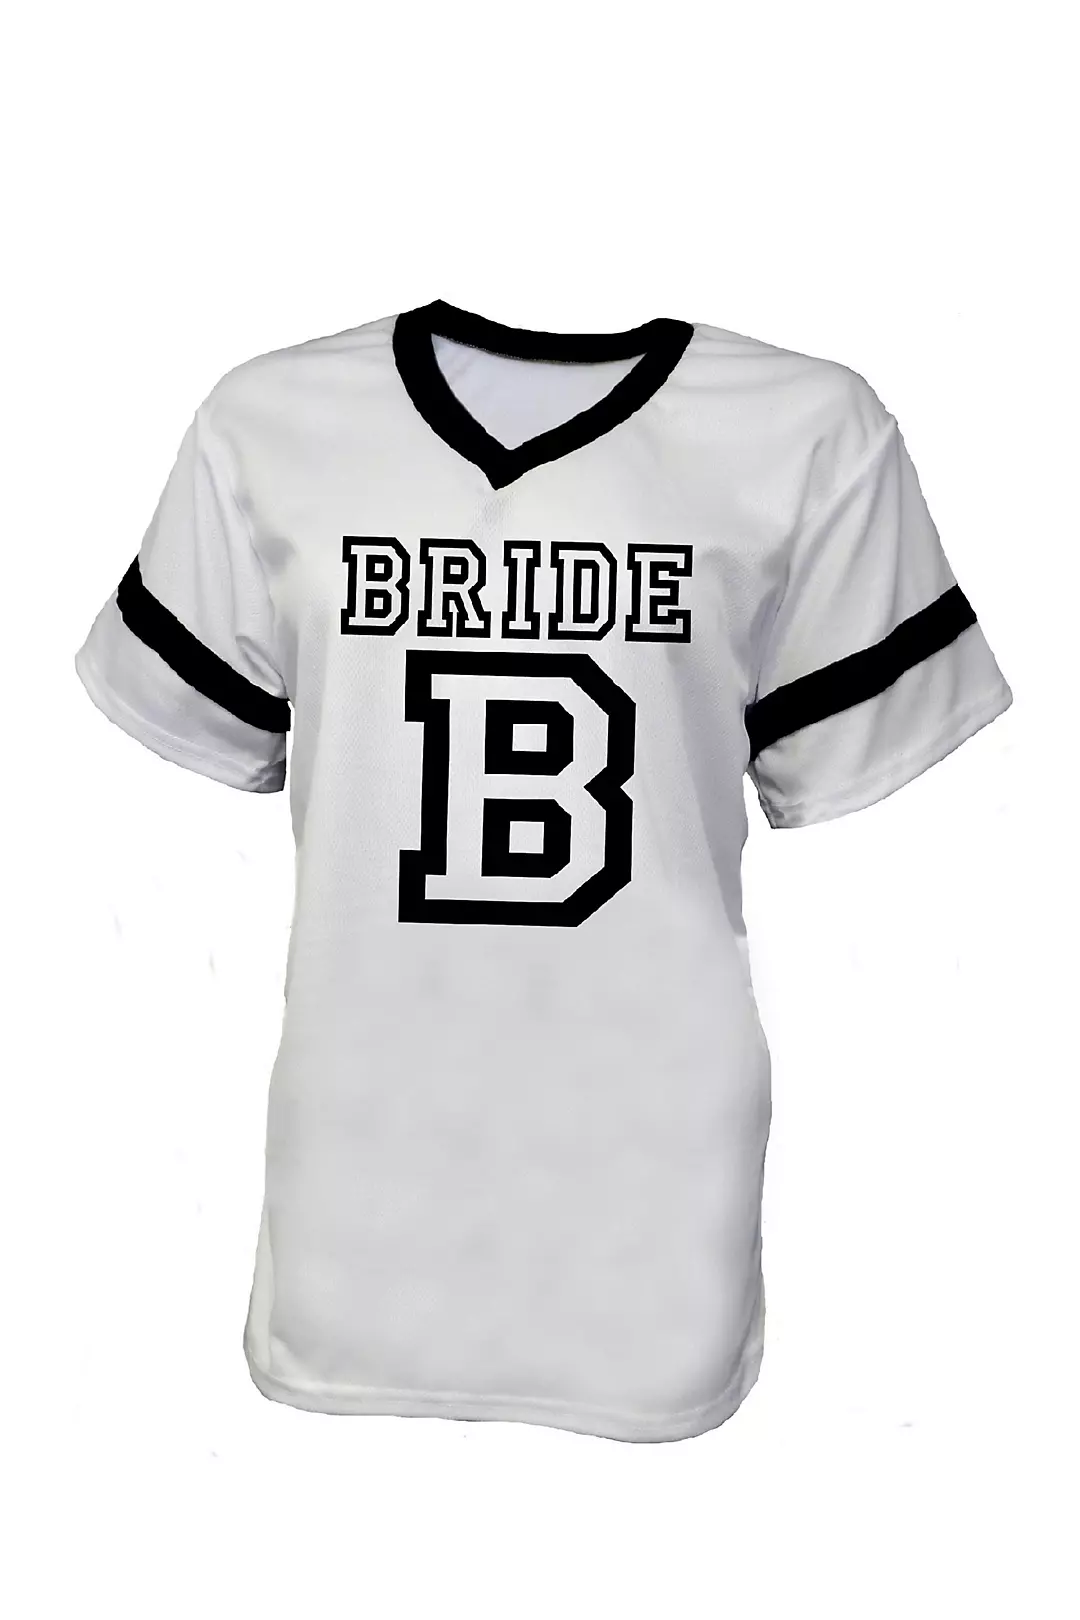 White Bride Football Jersey Image